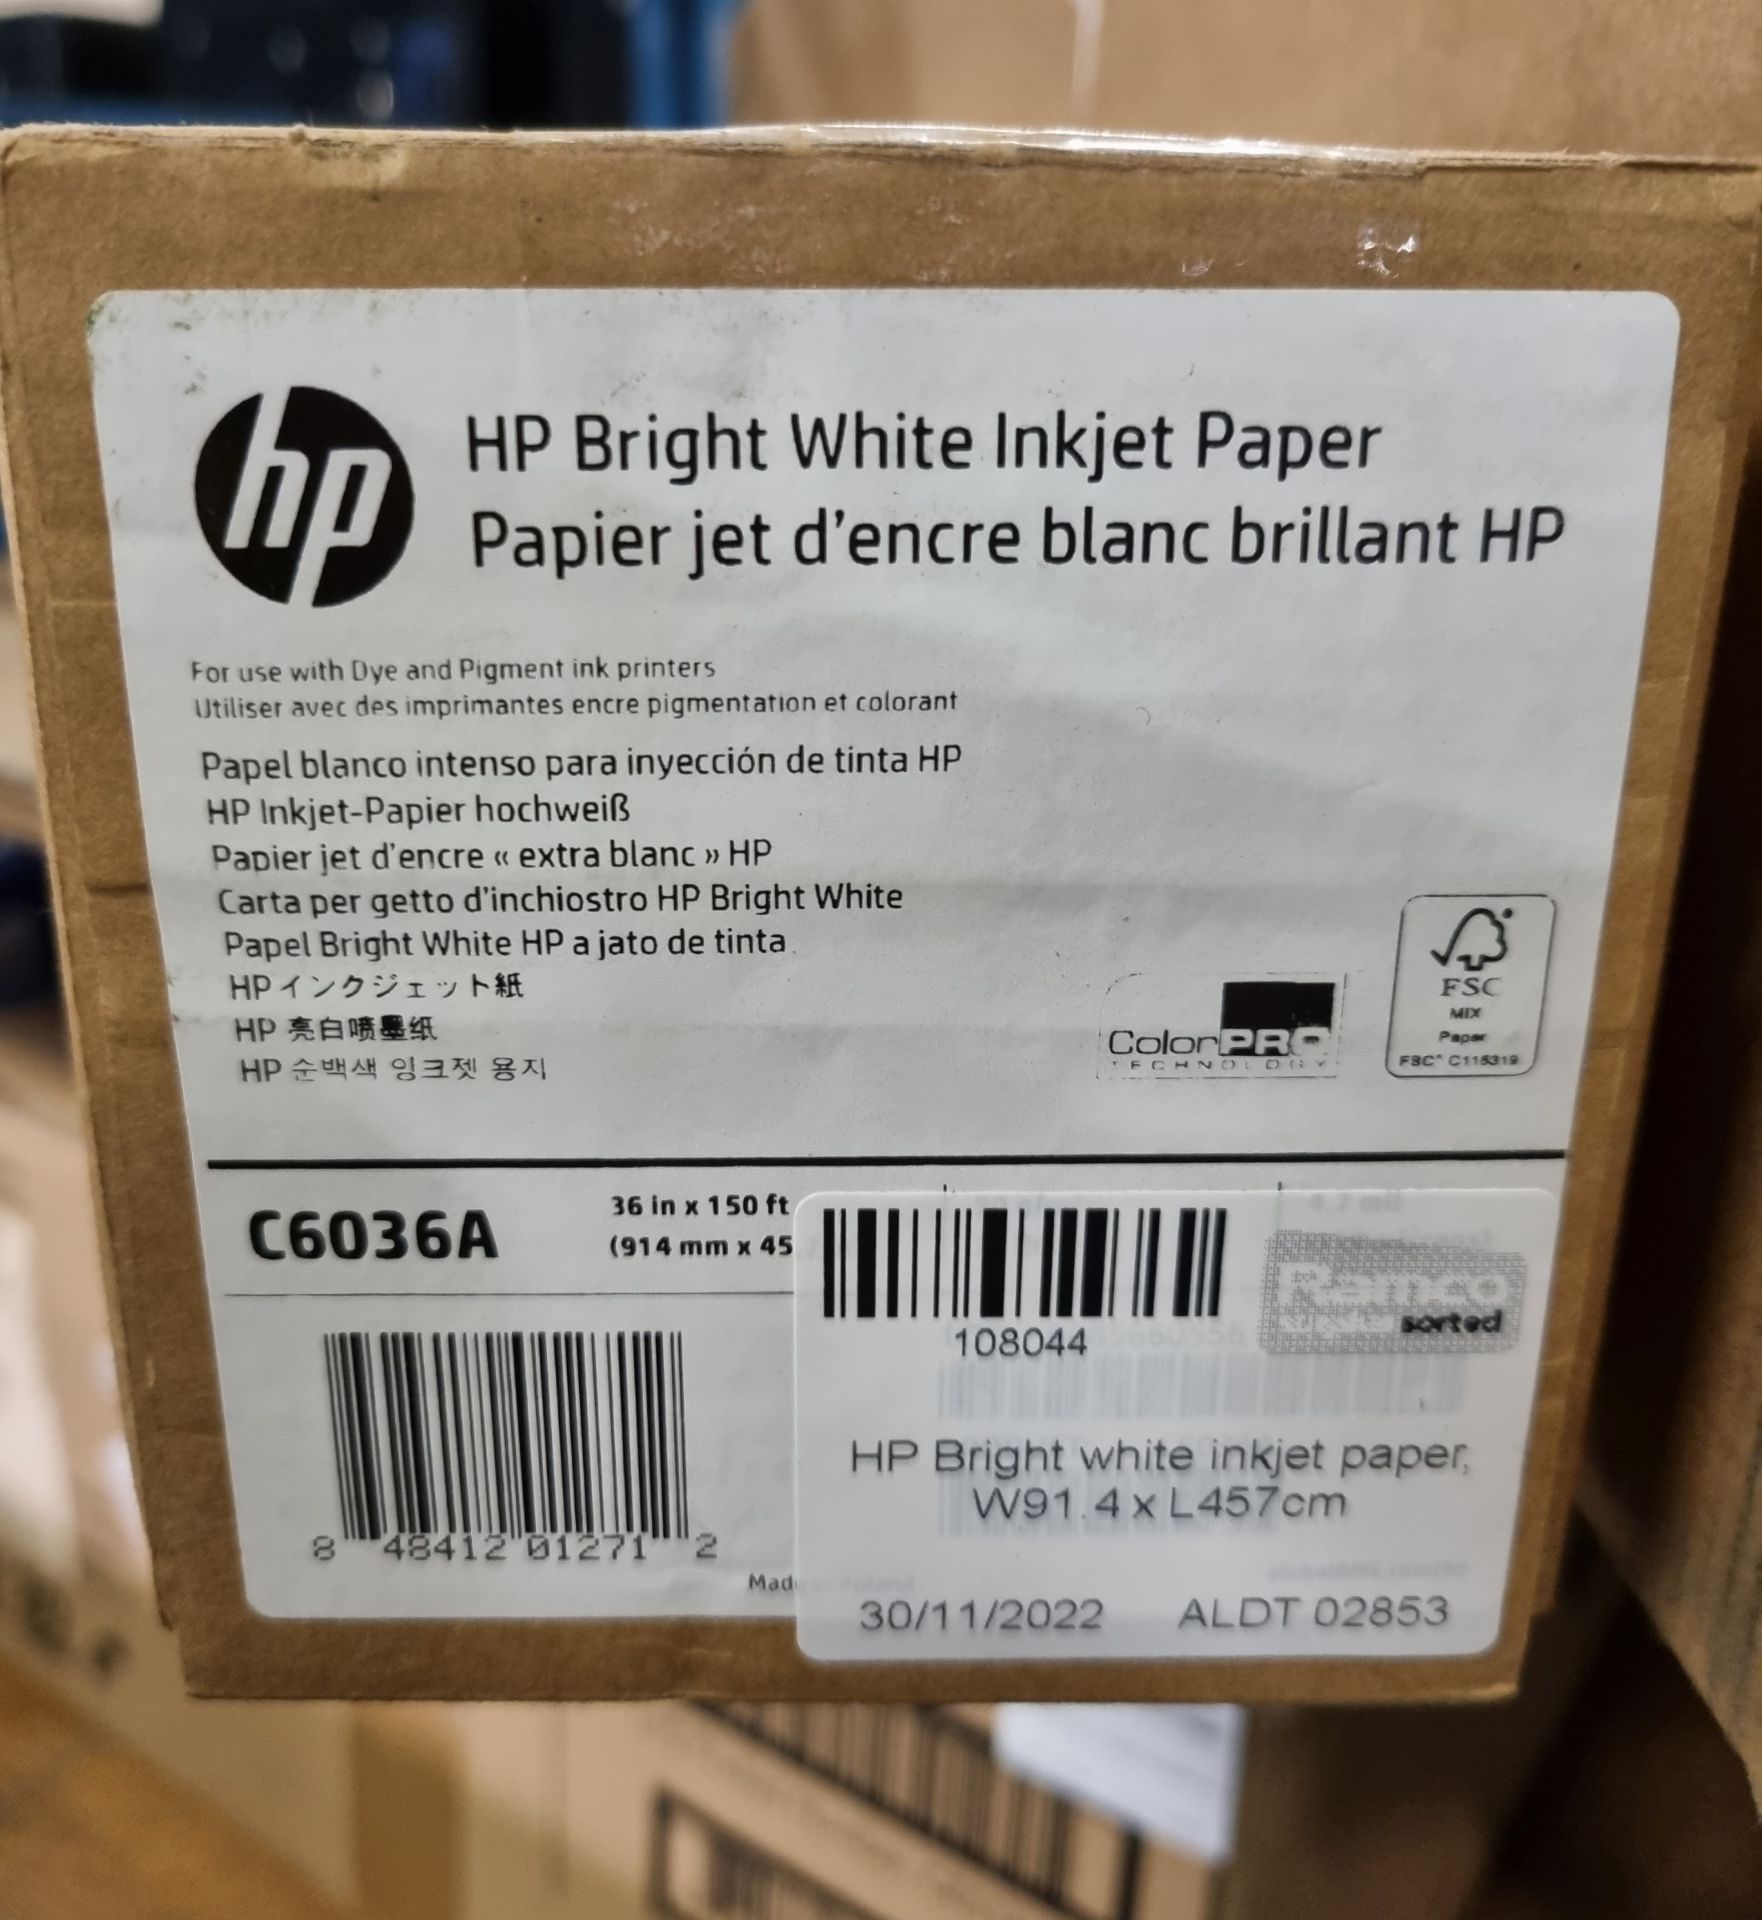 4x rolls of HP Bright white inkjet paper - W91.4 x L457cm - Image 2 of 2